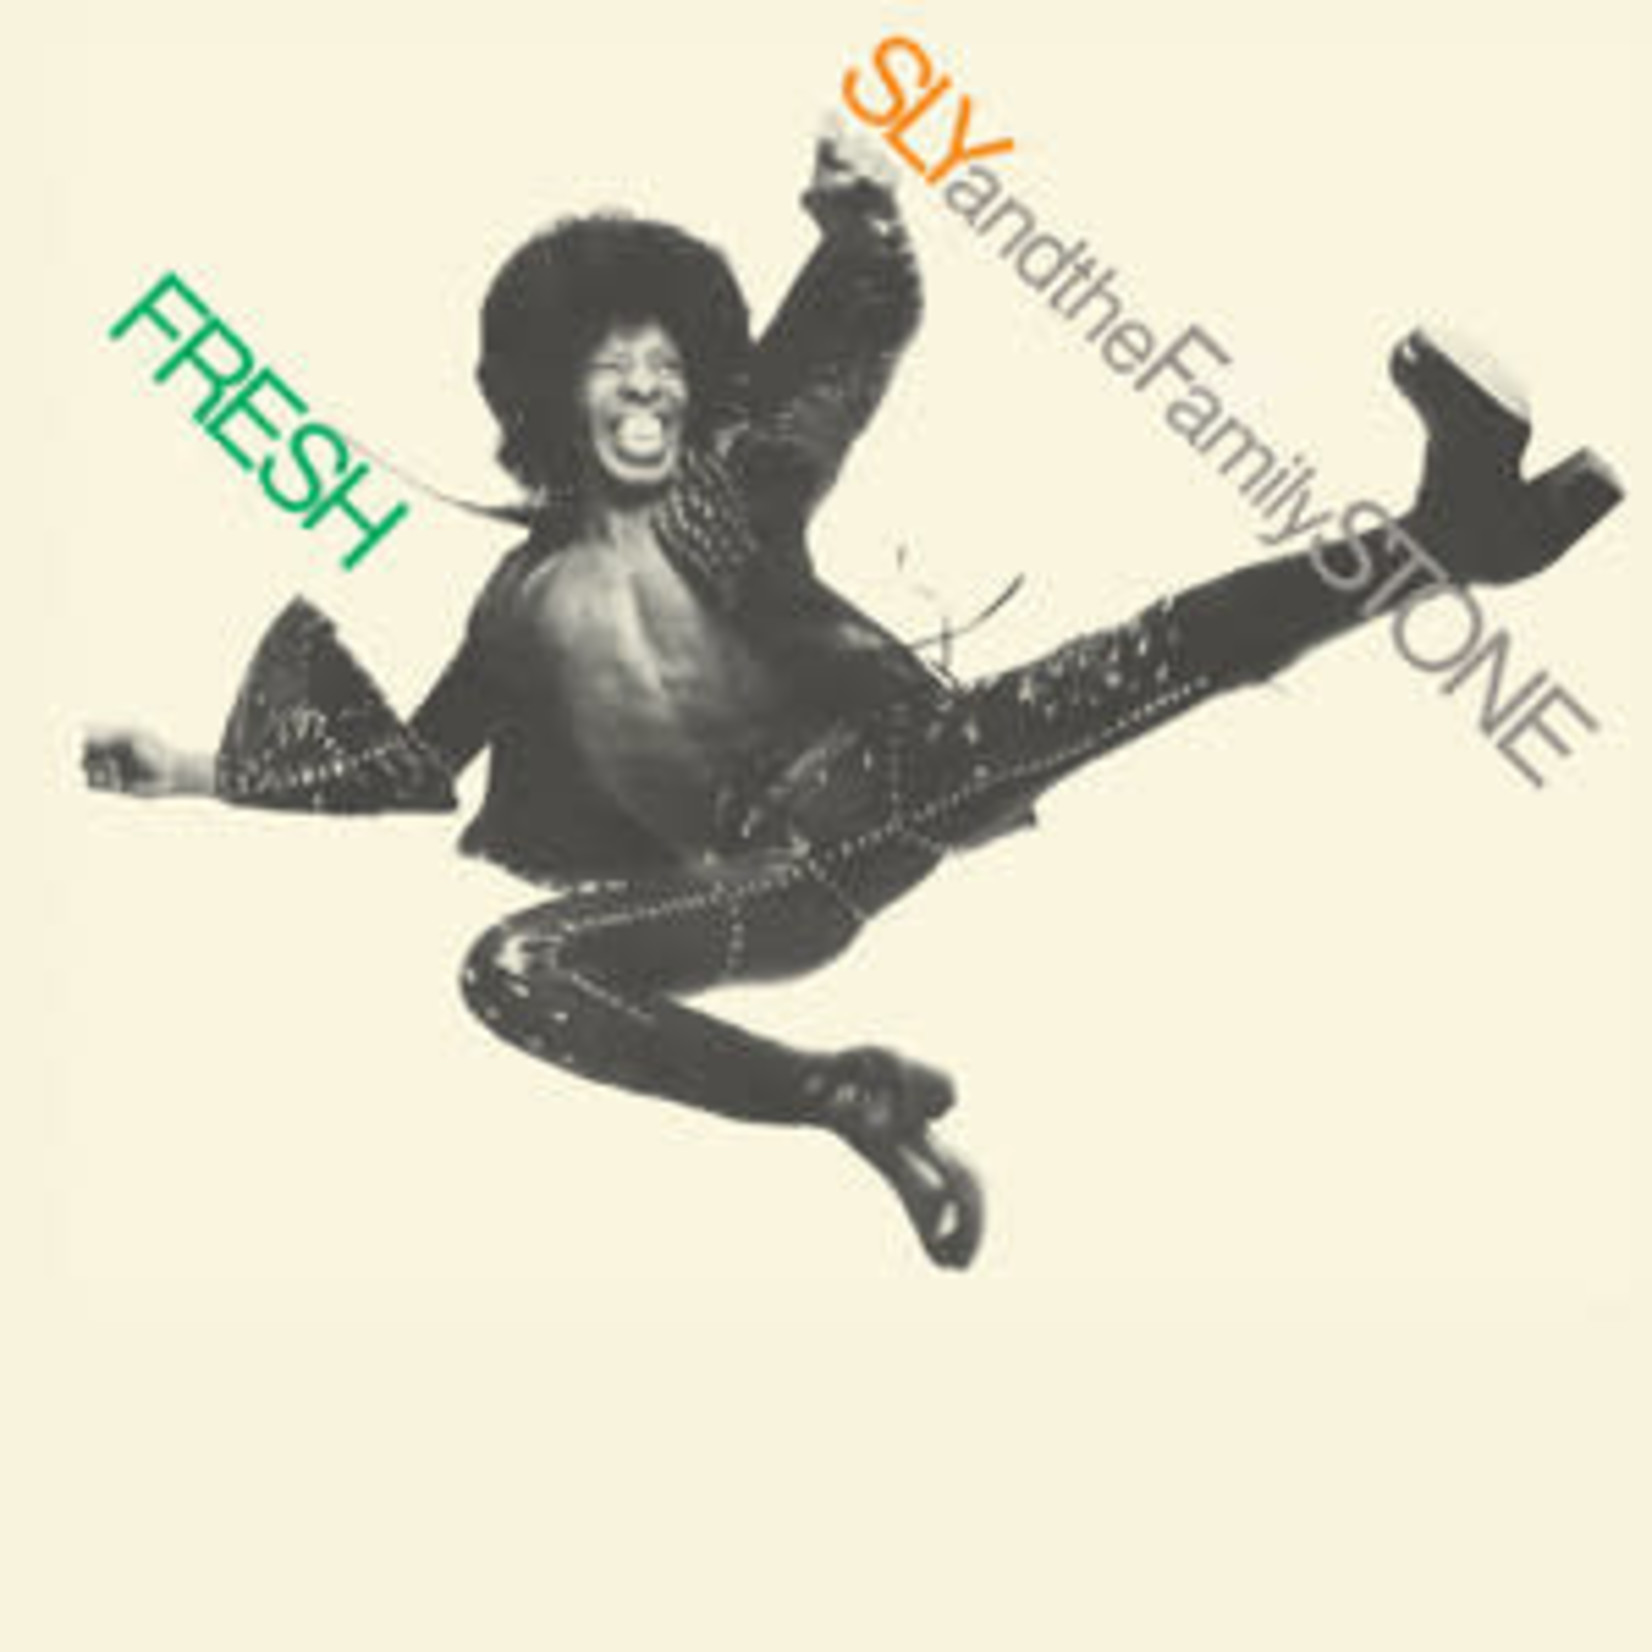 [New] Sly & the Family Stone - Fresh